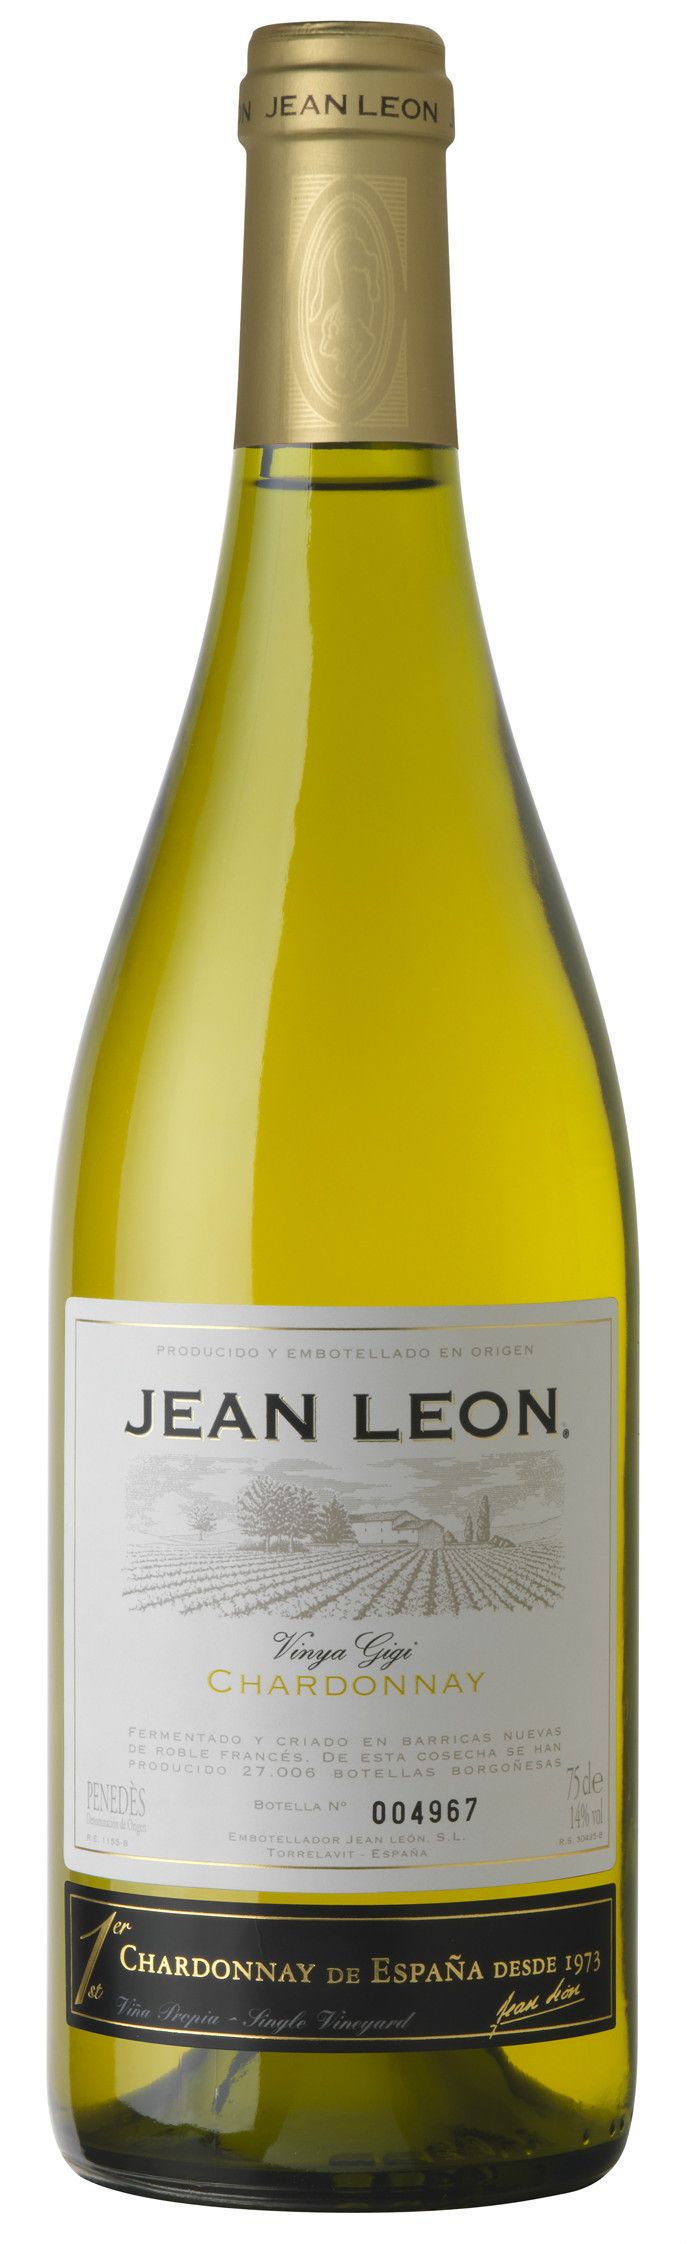 Jean Leon, Chardonnay Vinya Gigi, 2006